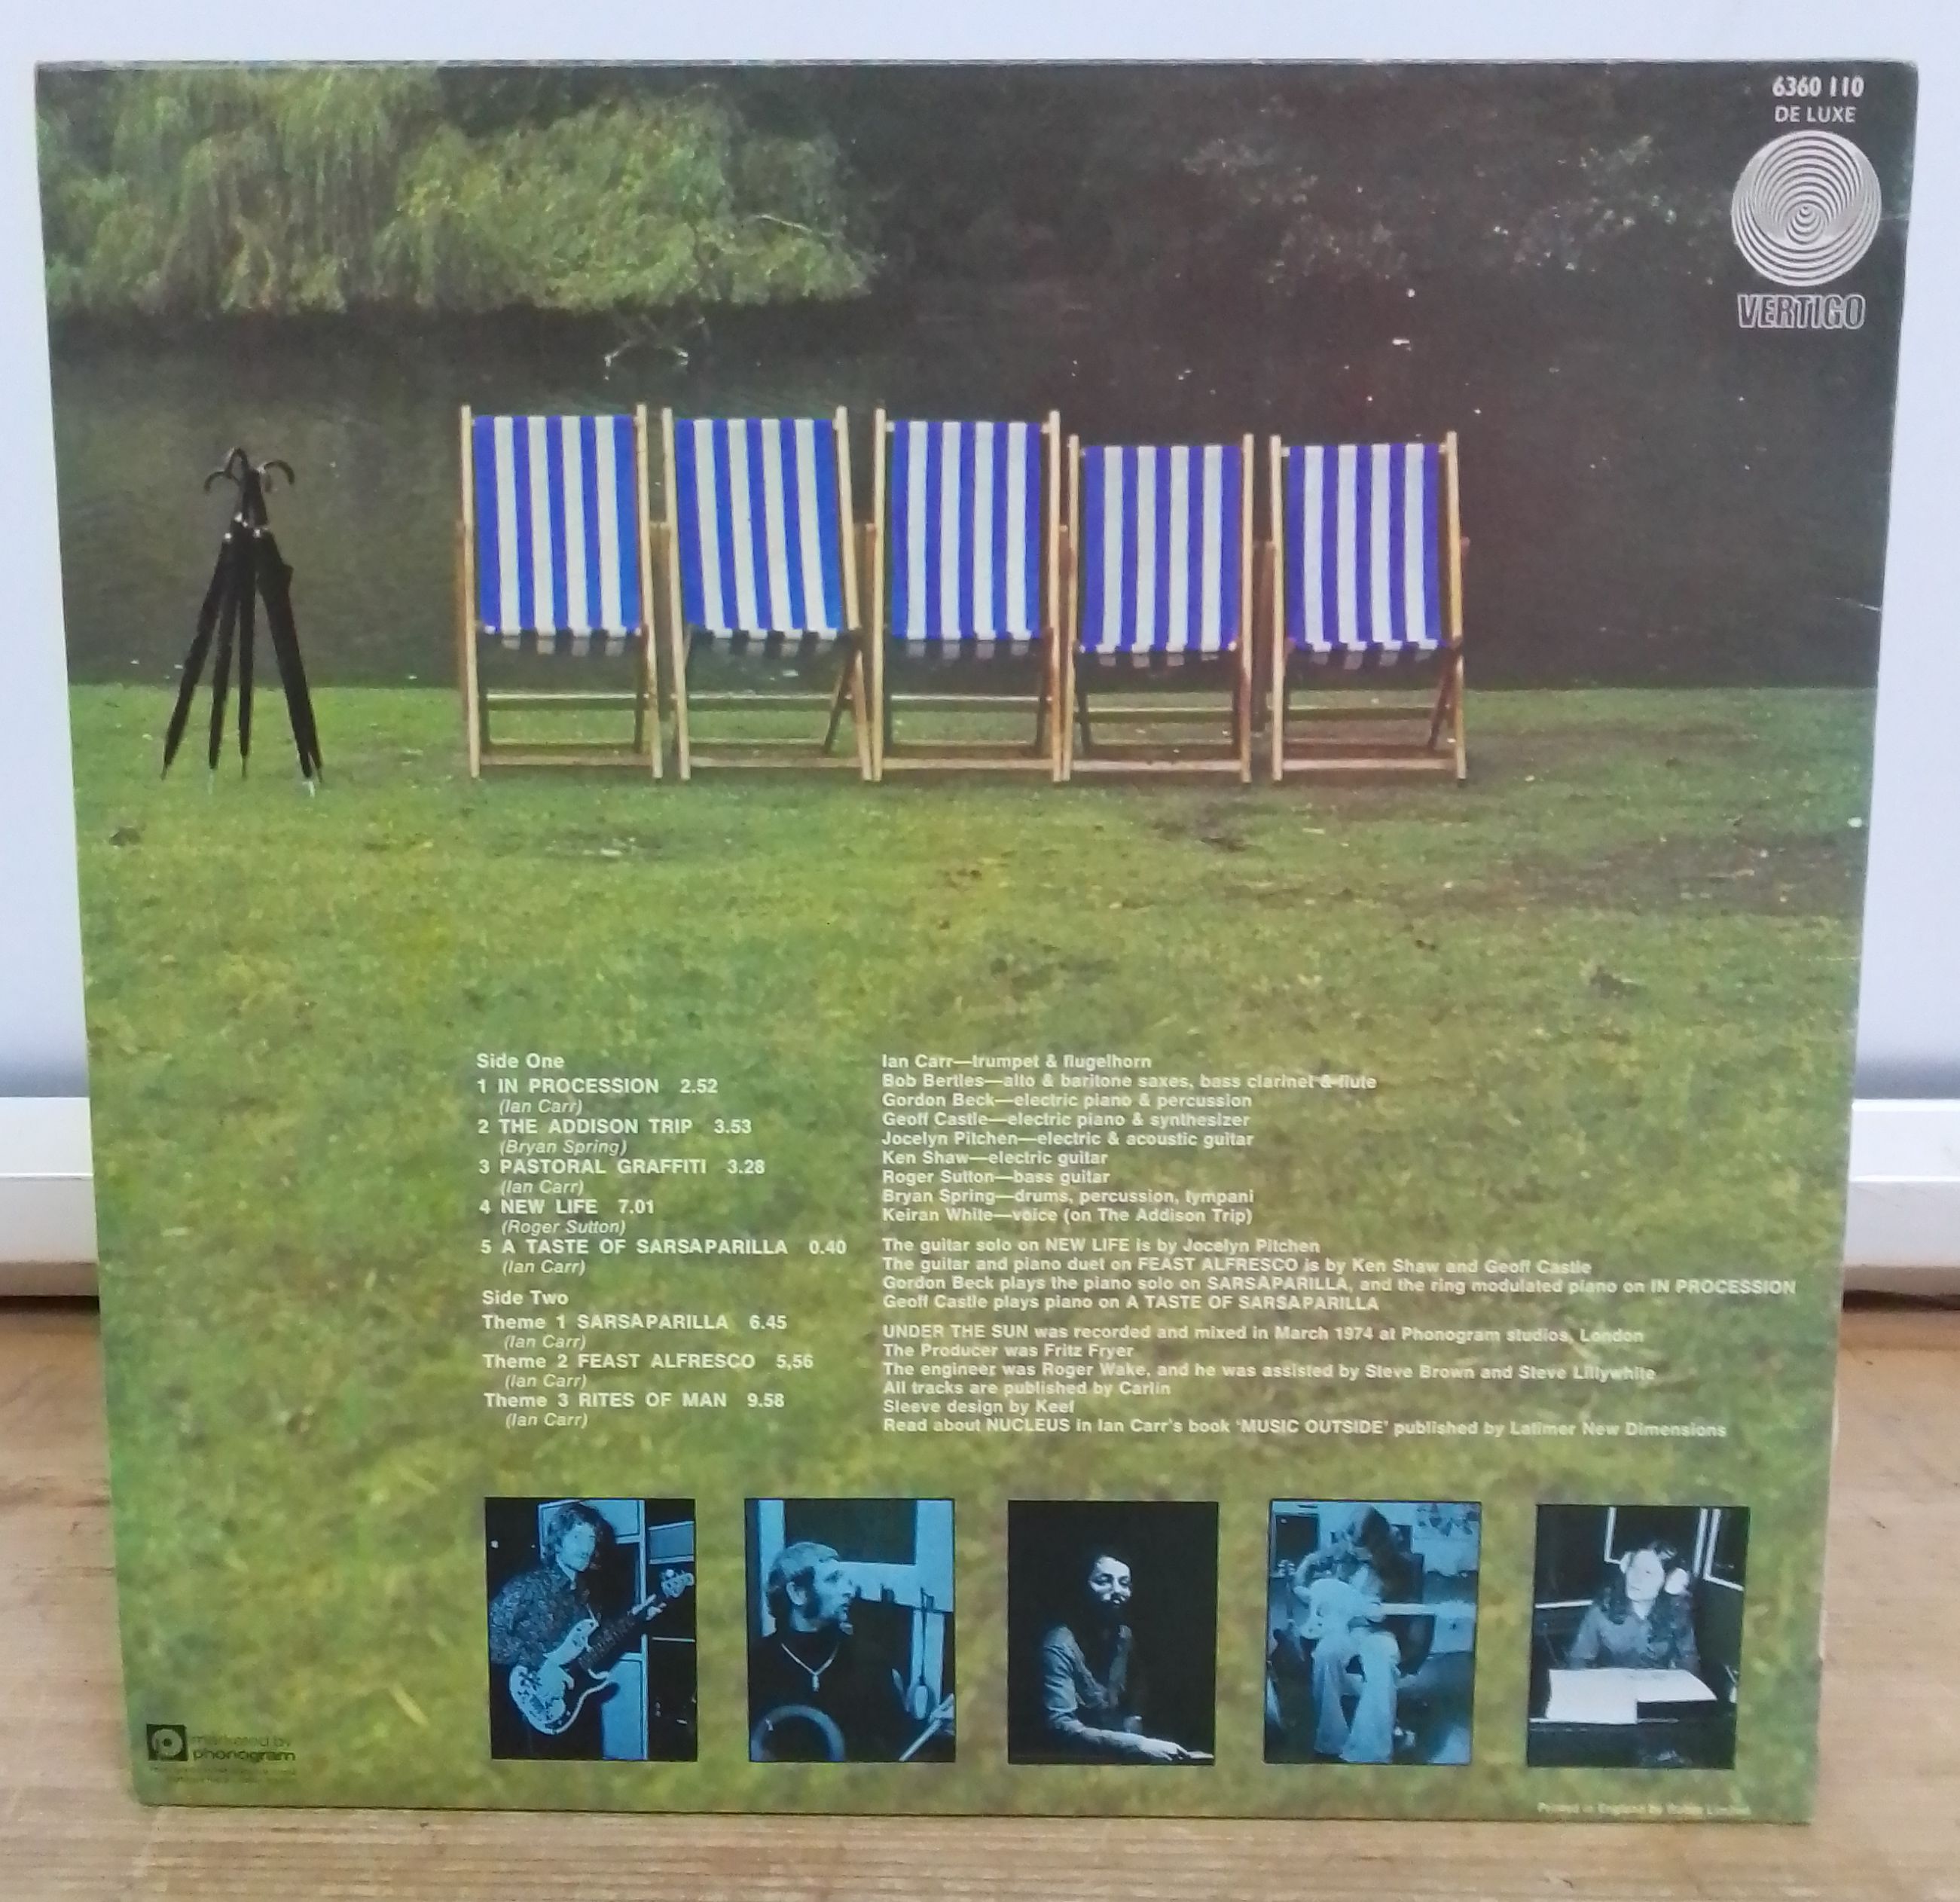 Nucleus - Under The Sun, stereo LP, 1st pressing, UK 1974, Vertigo 6360 110 - Image 2 of 4